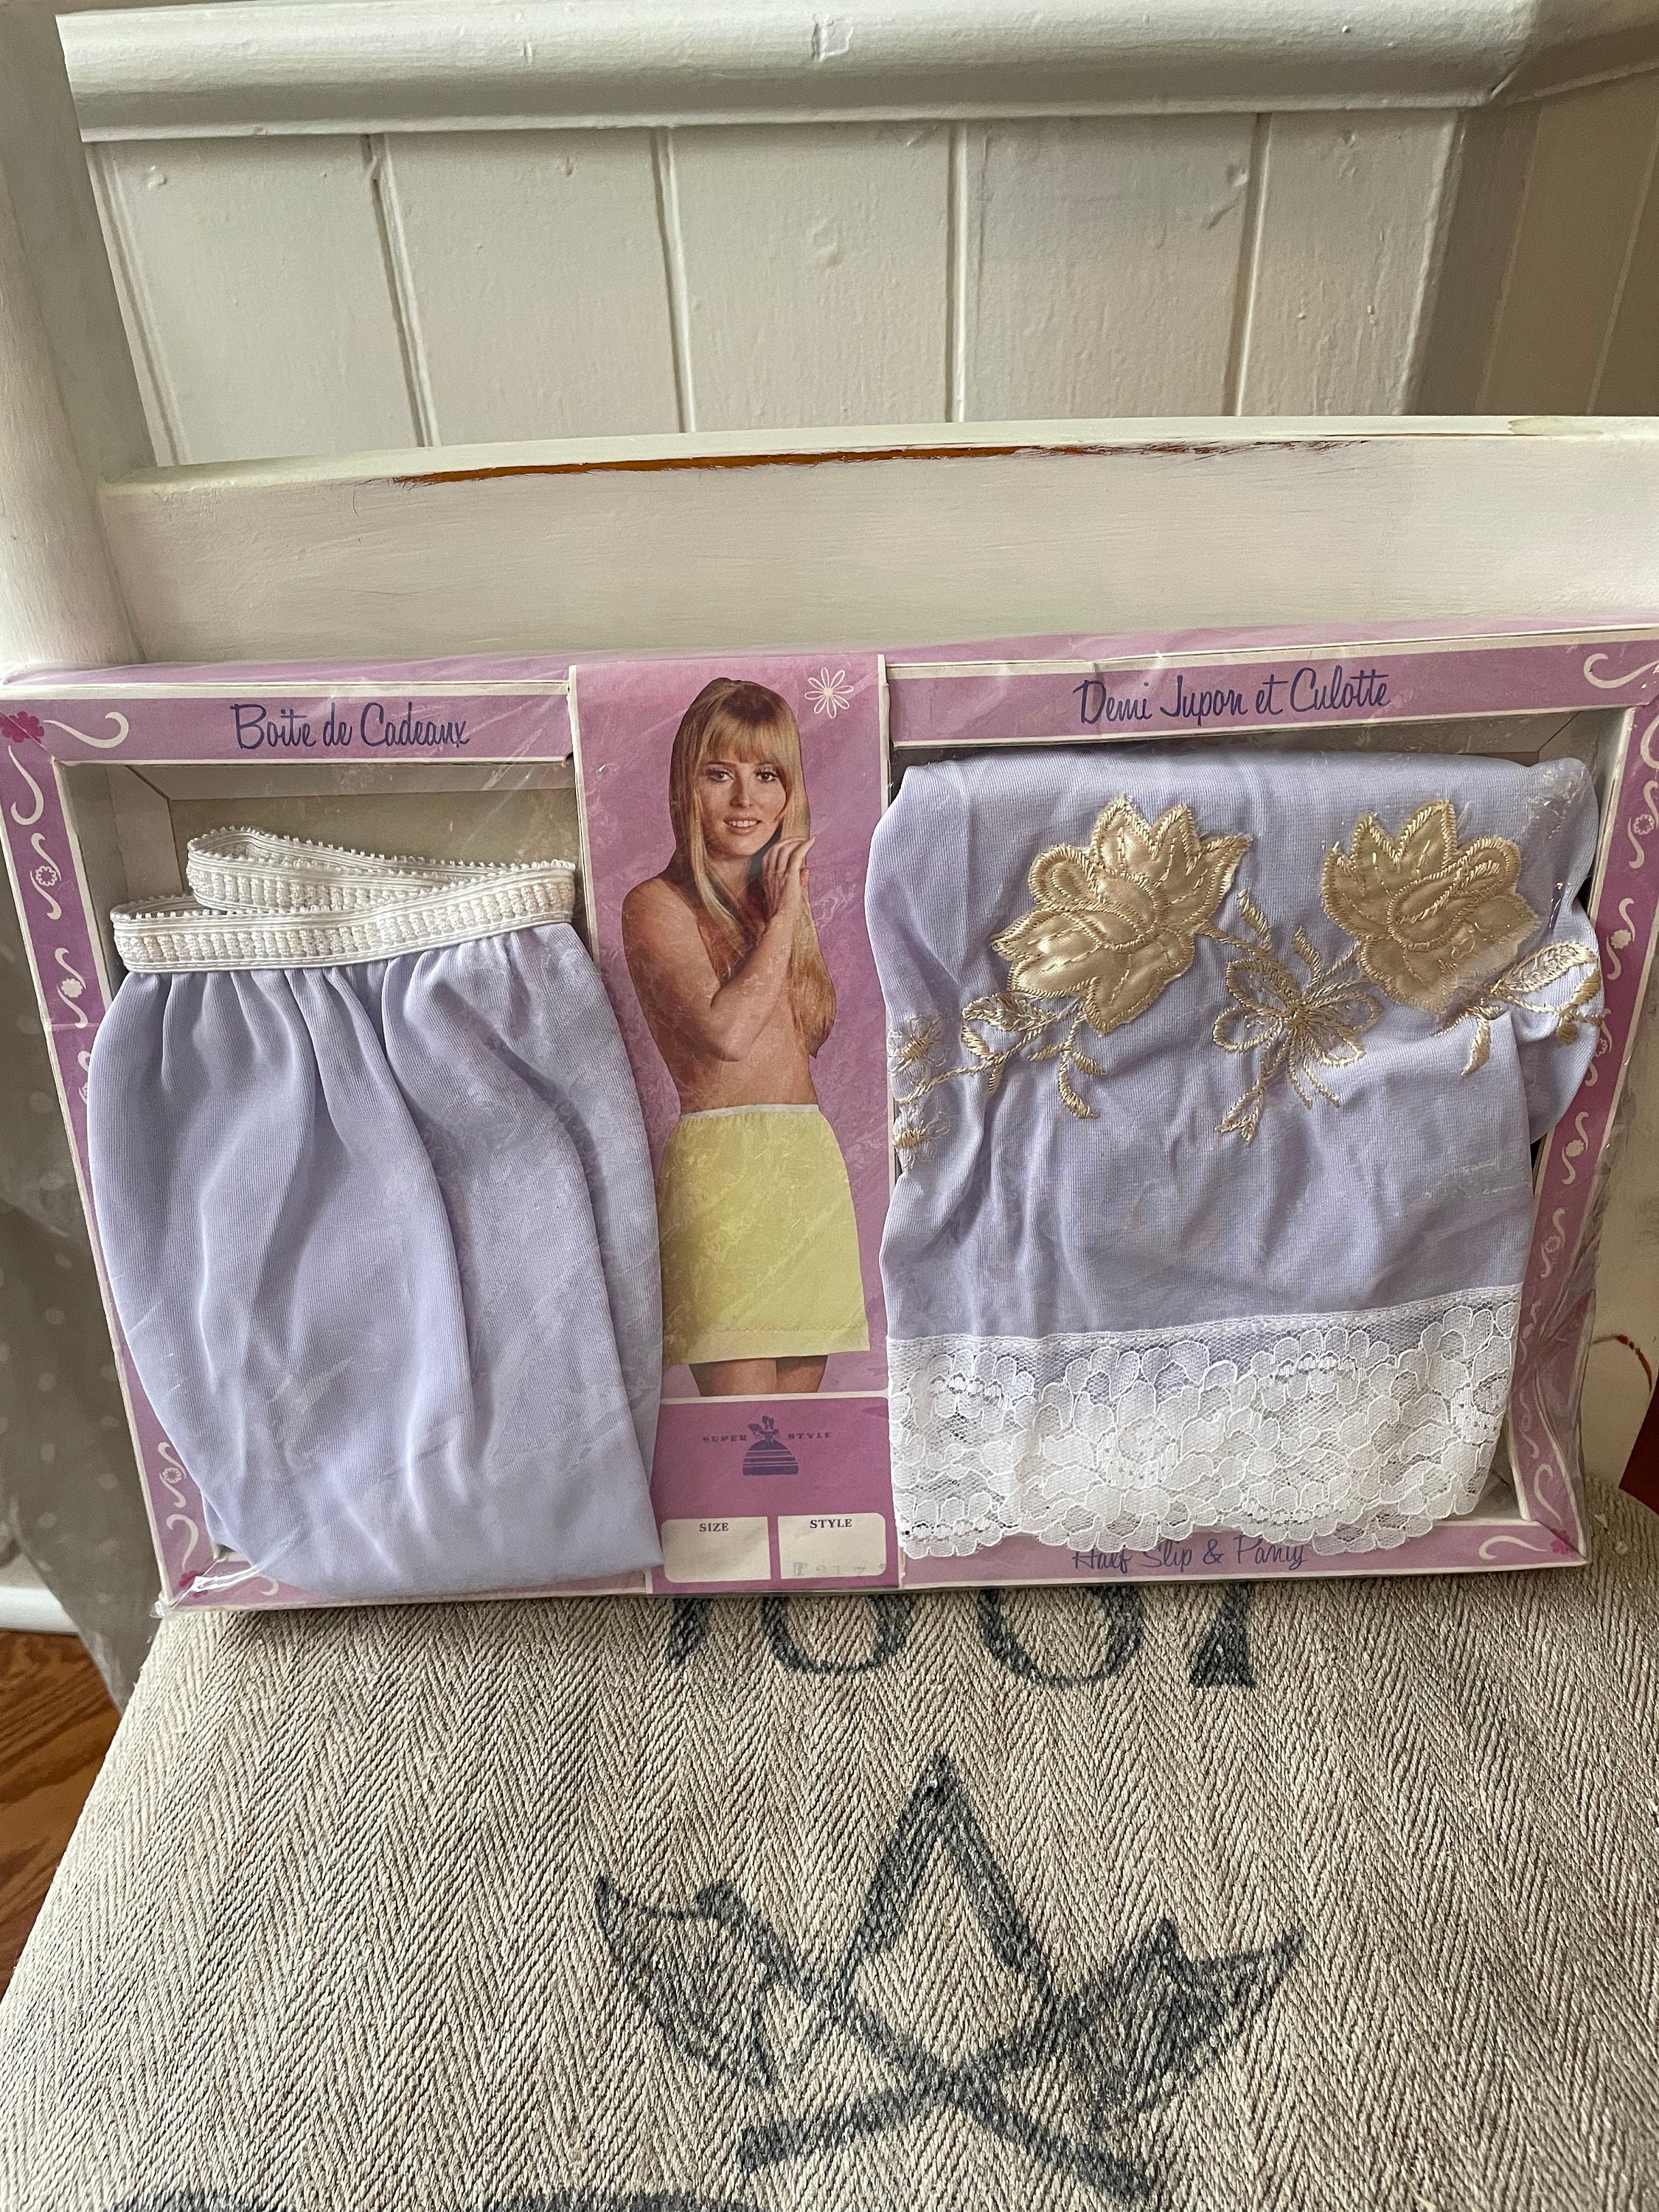 Organic Cotton Bikini Panties, Lace Back, Sexy Underwear, Women's